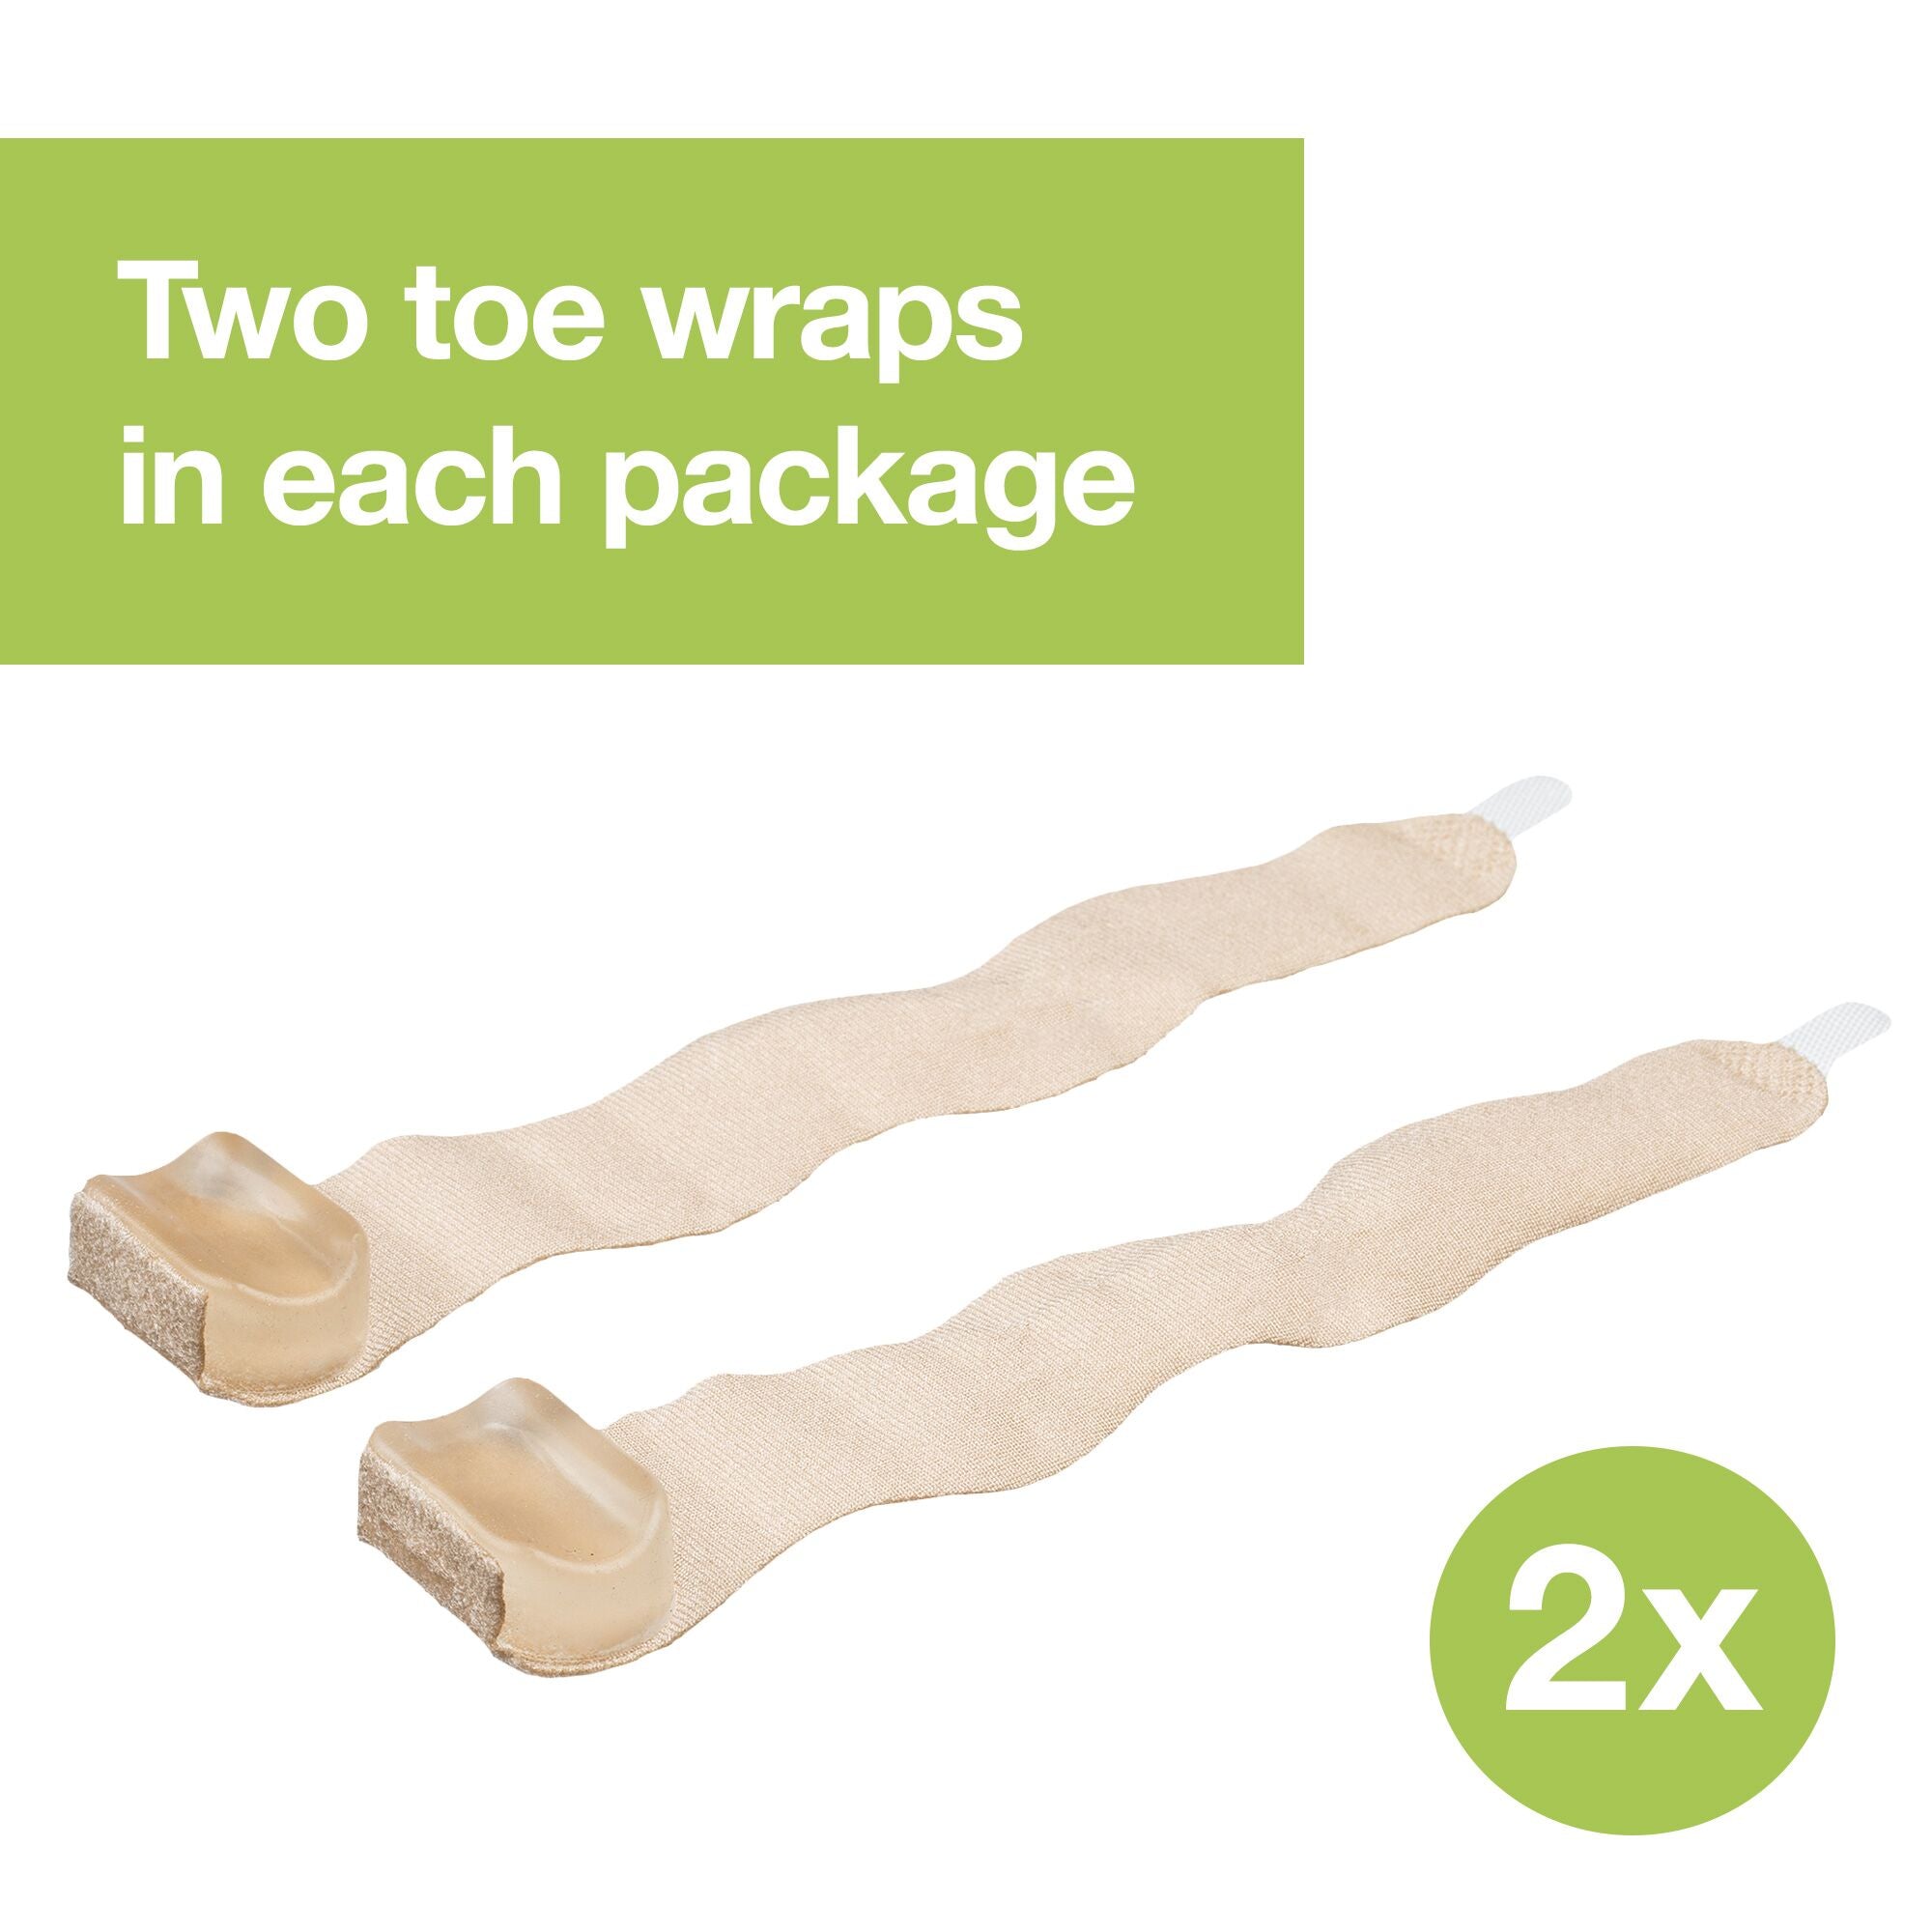 Bunion Toe Separator Wraps - 1 Pair (2 Count) - ZenToes